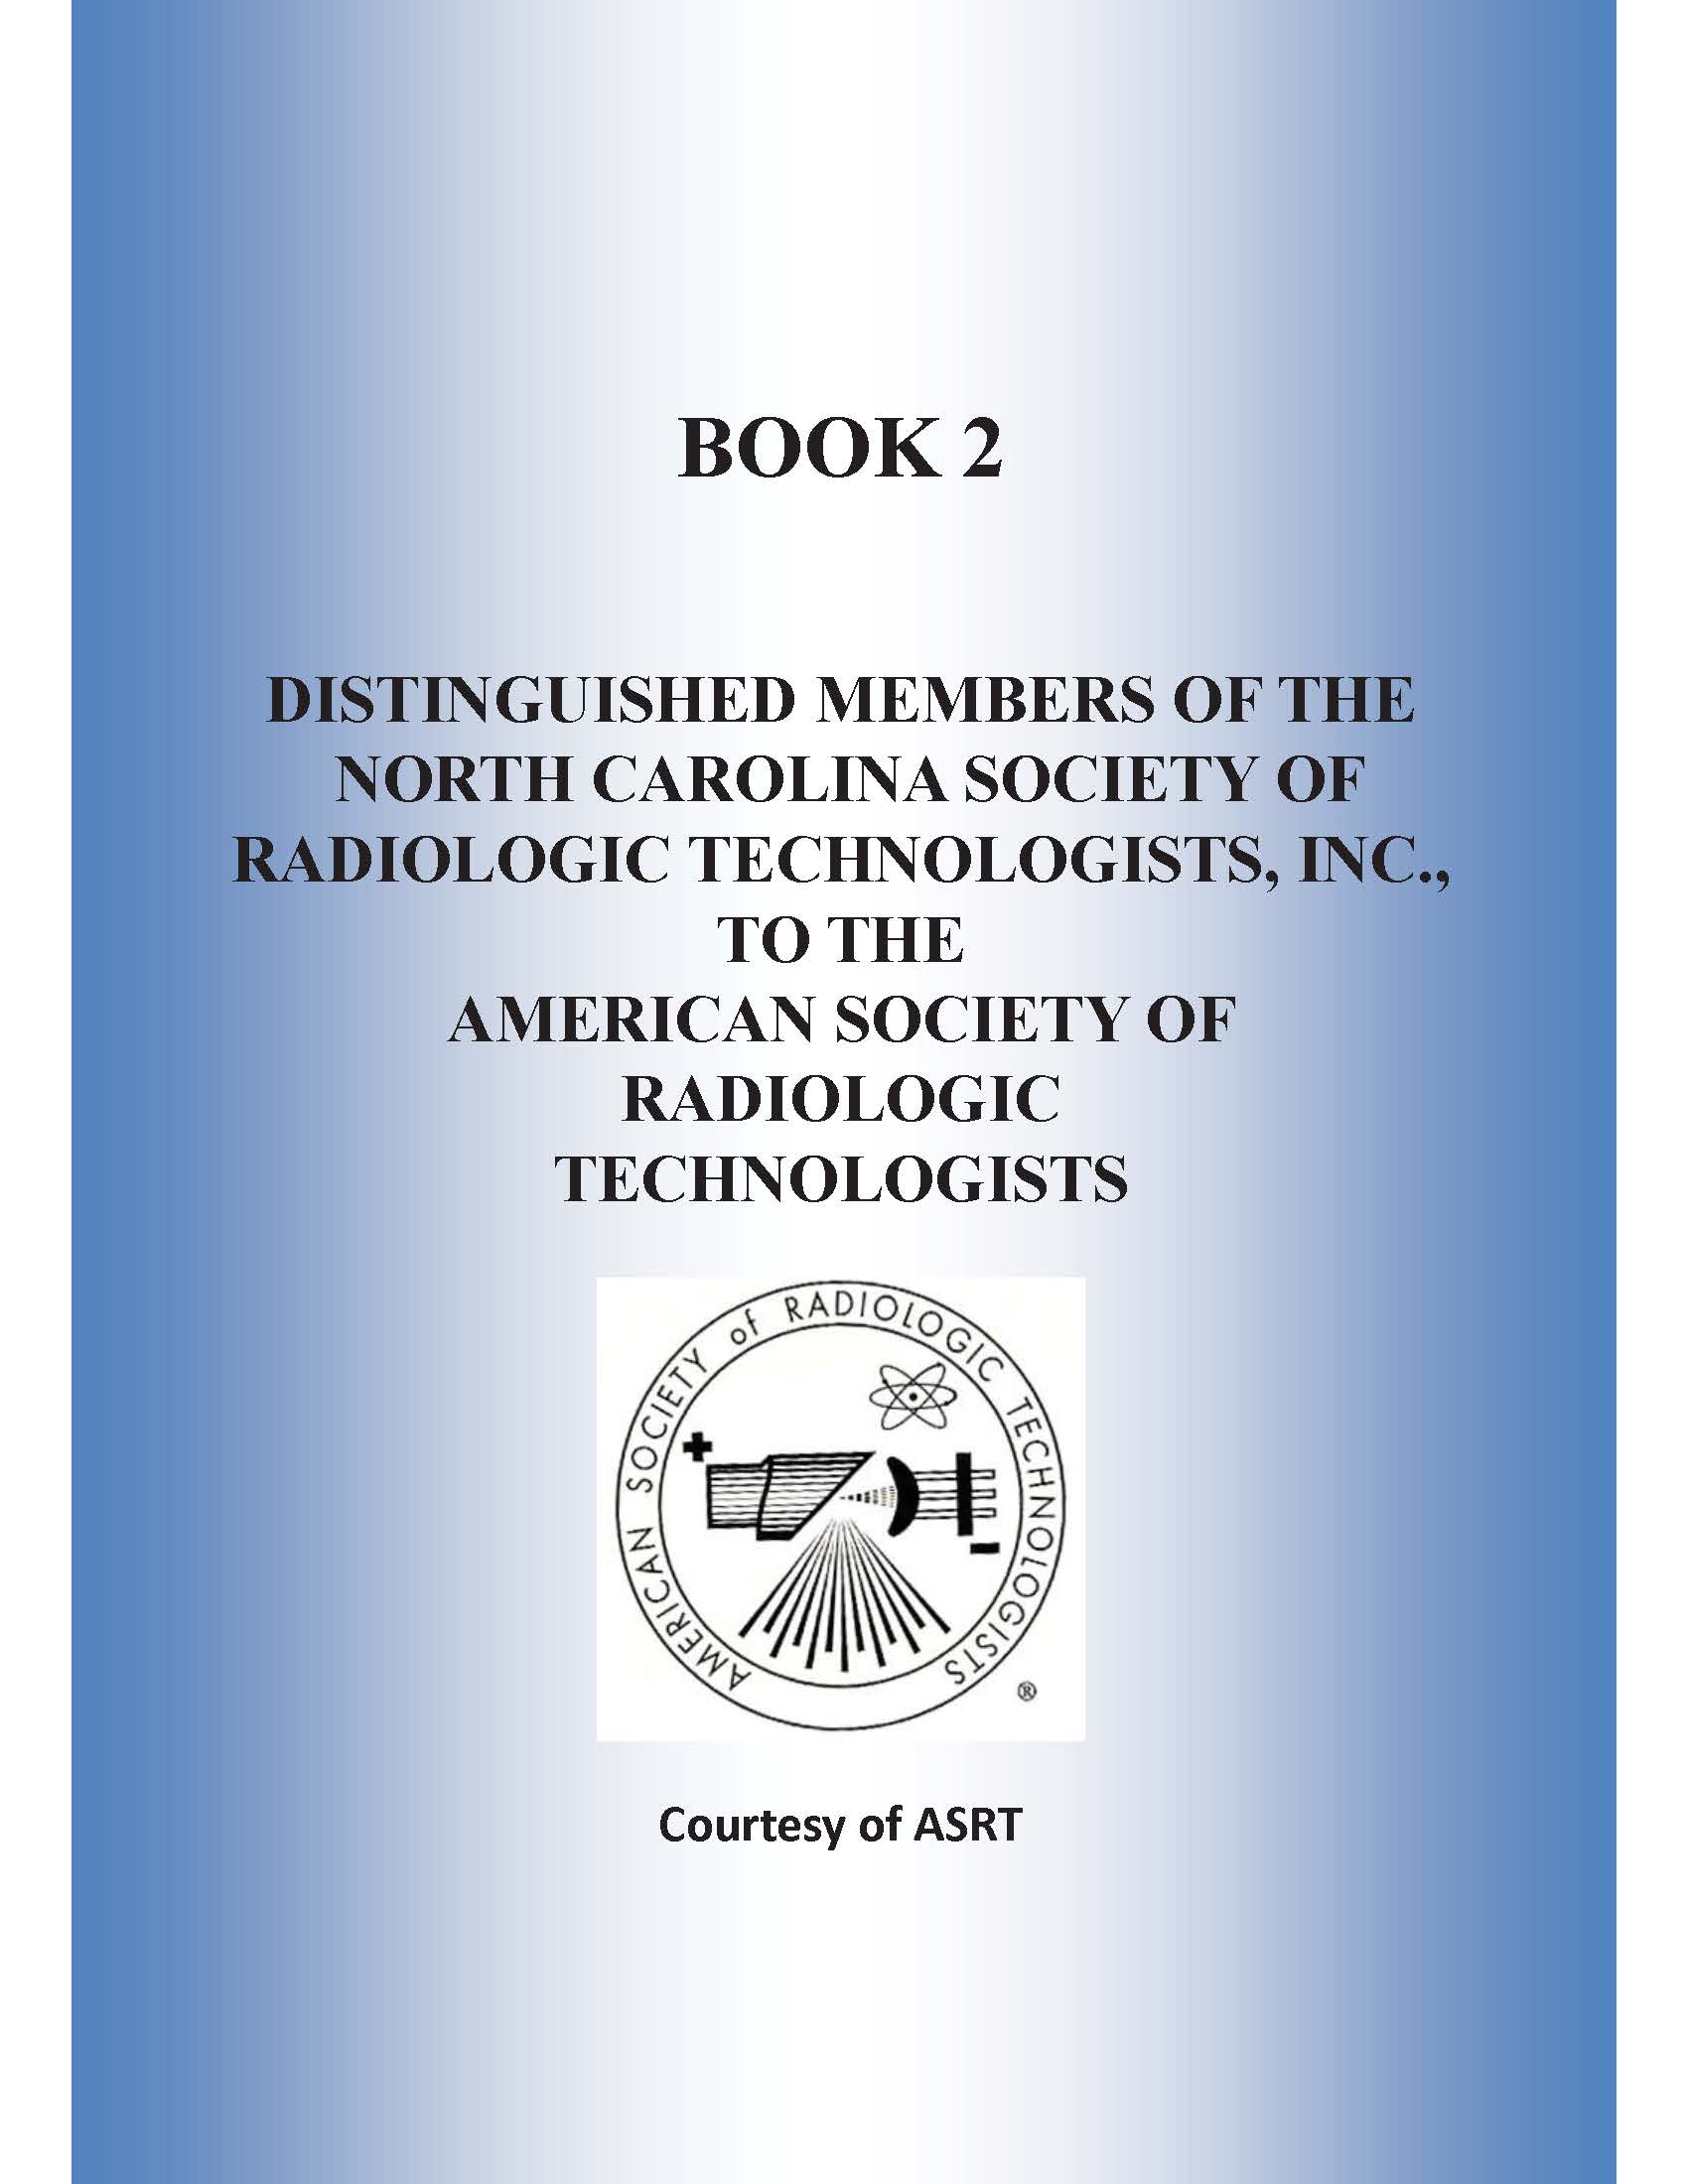 Book 2 NCSRT, Inc History